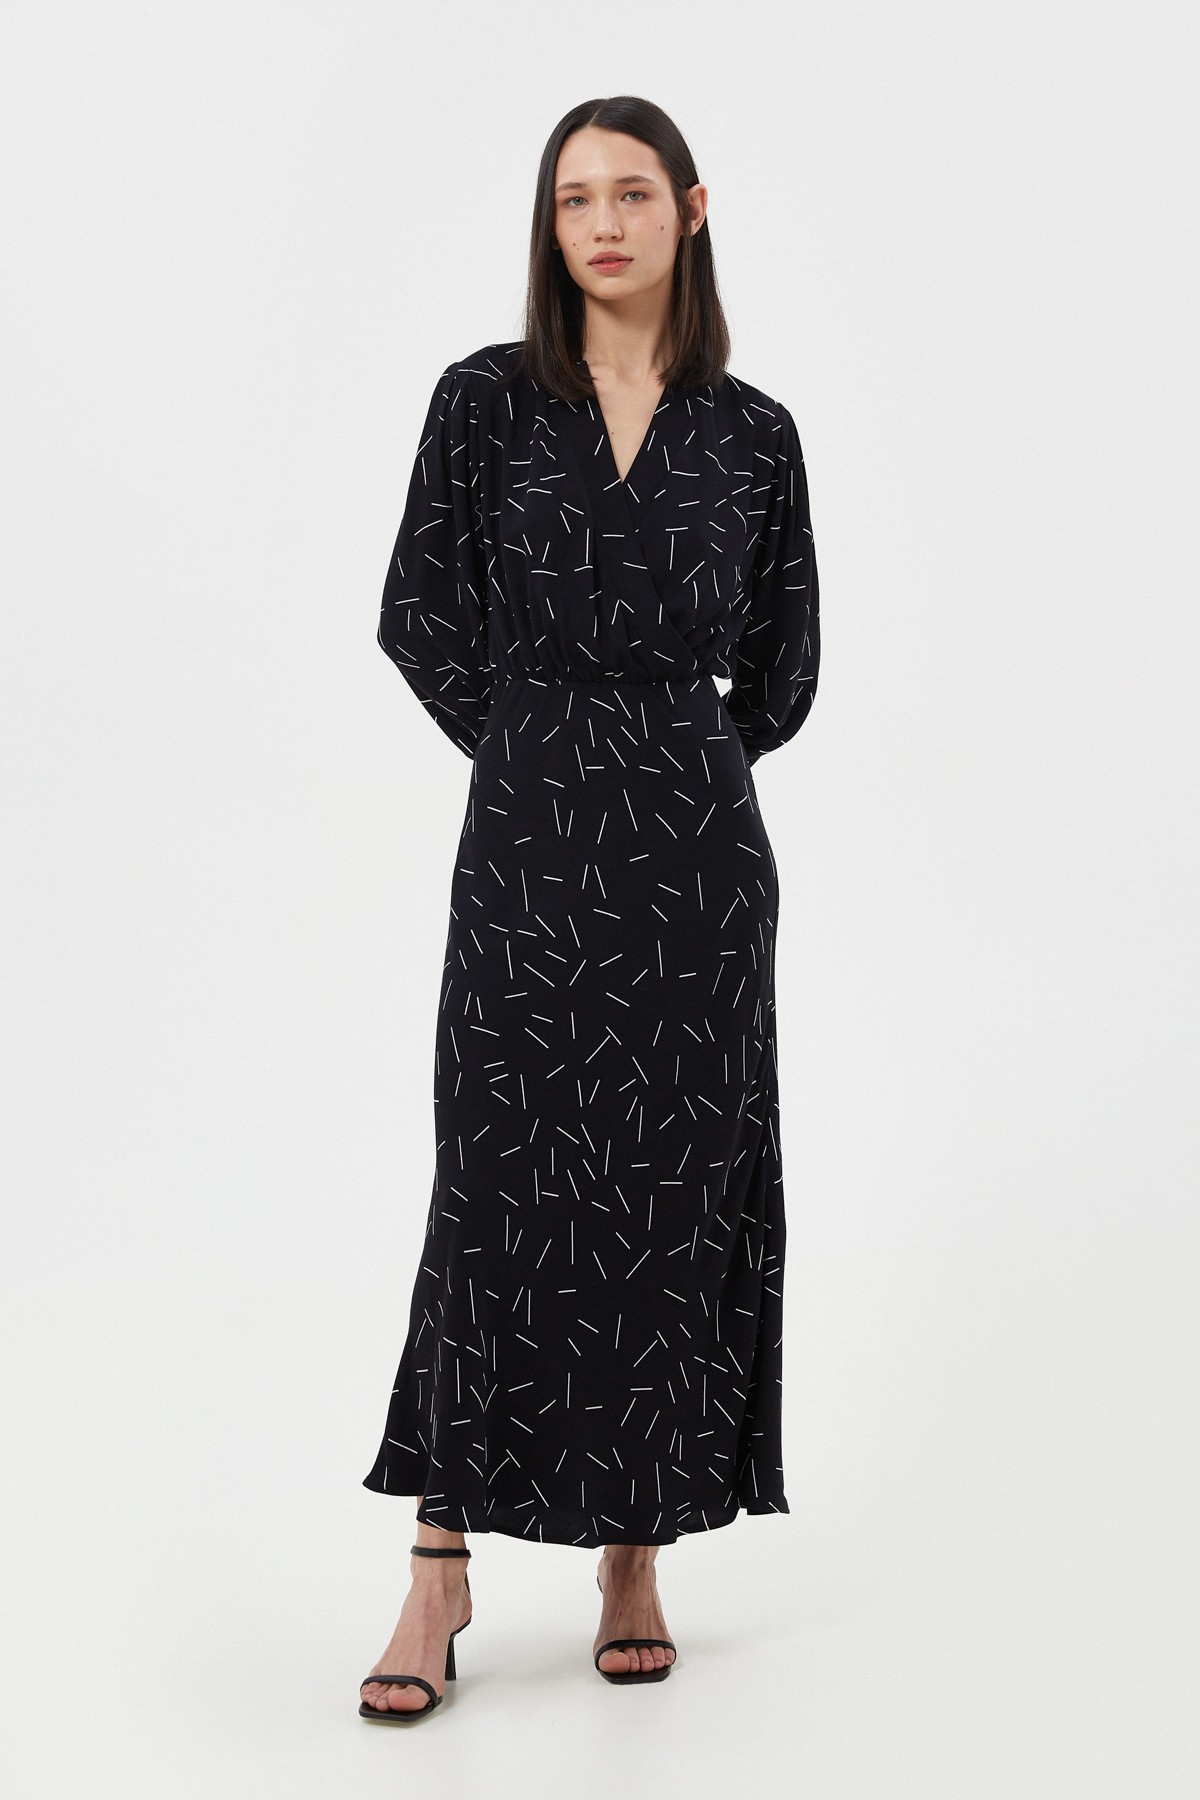 Black viscose elongated midi dress in geometric print